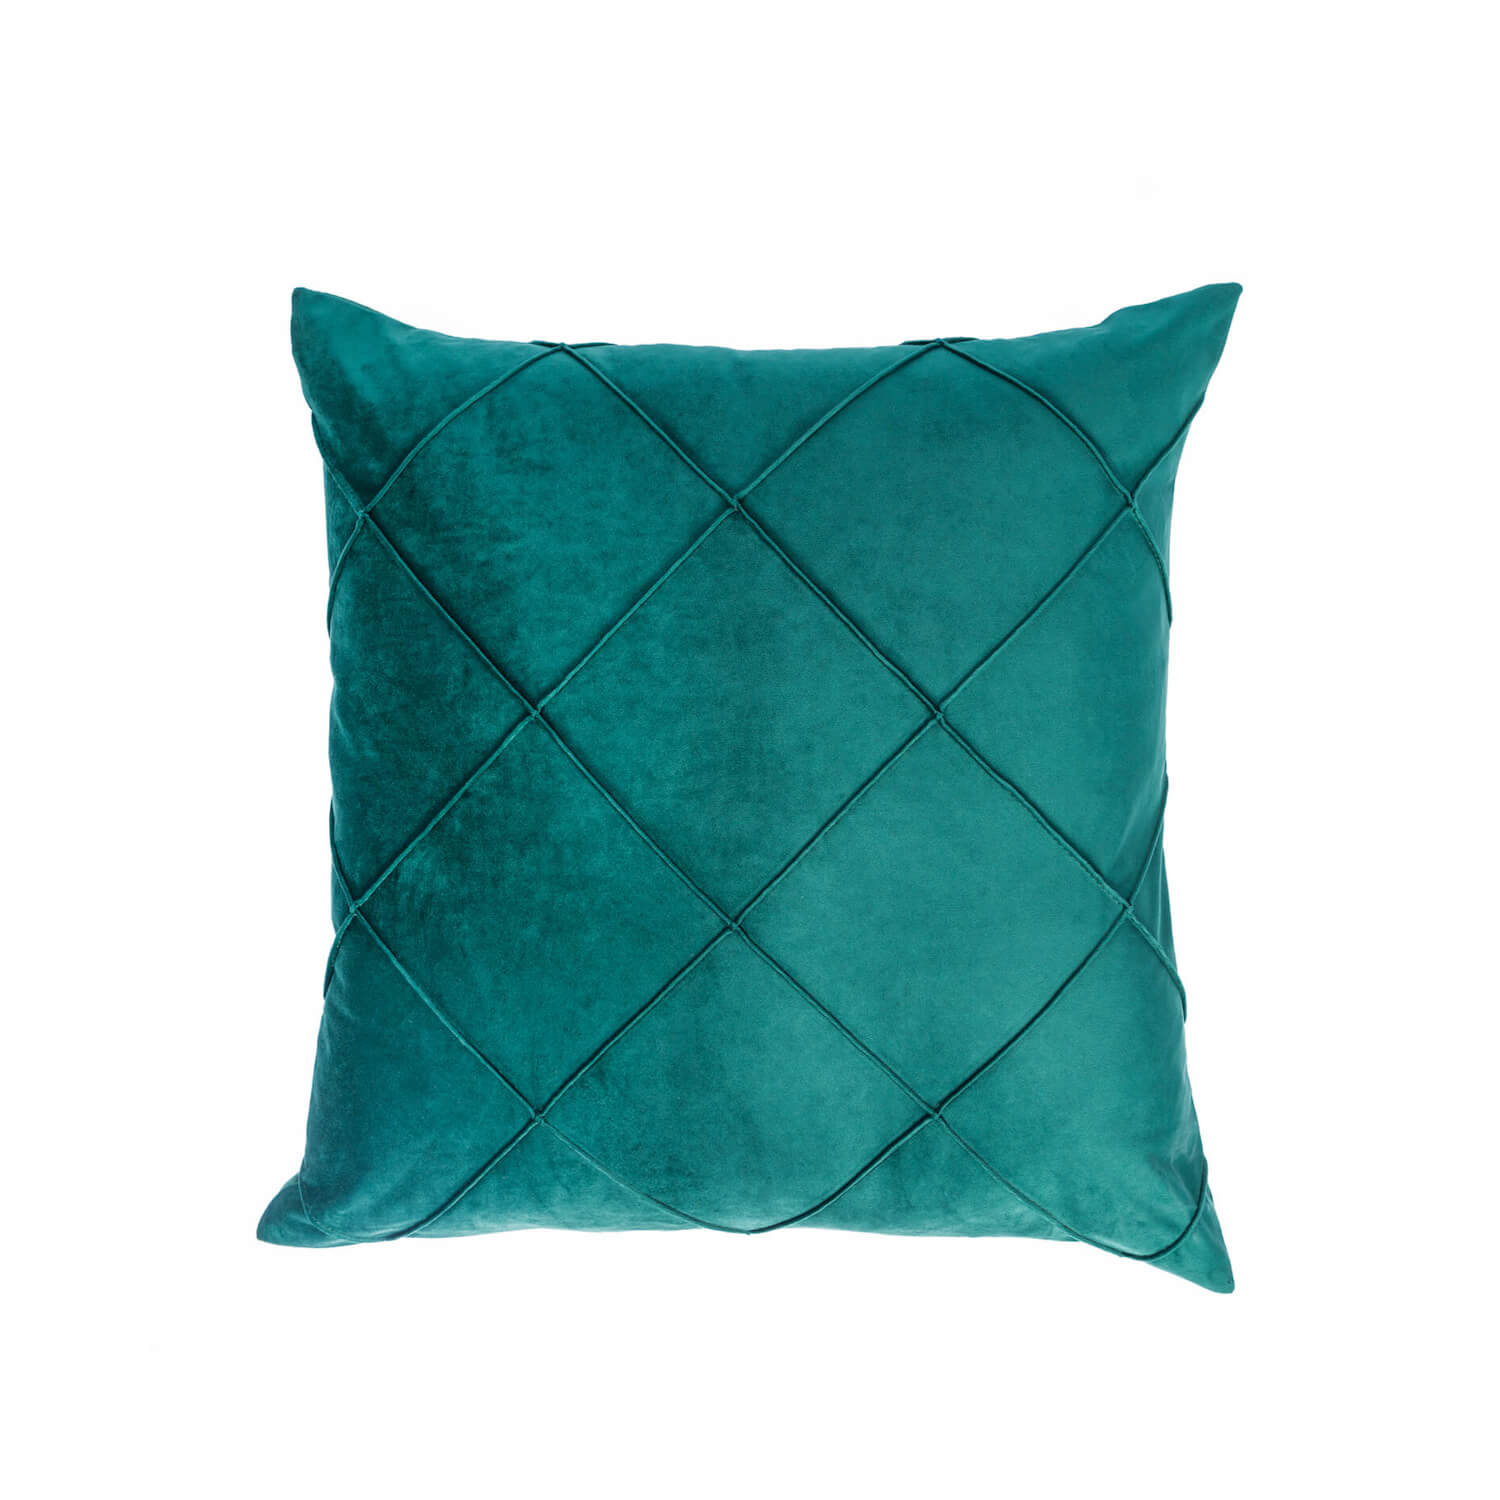 Kavanagh Giftware Velvet Cushion 44cm x 44cm - Emerald Green 1 Shaws Department Stores